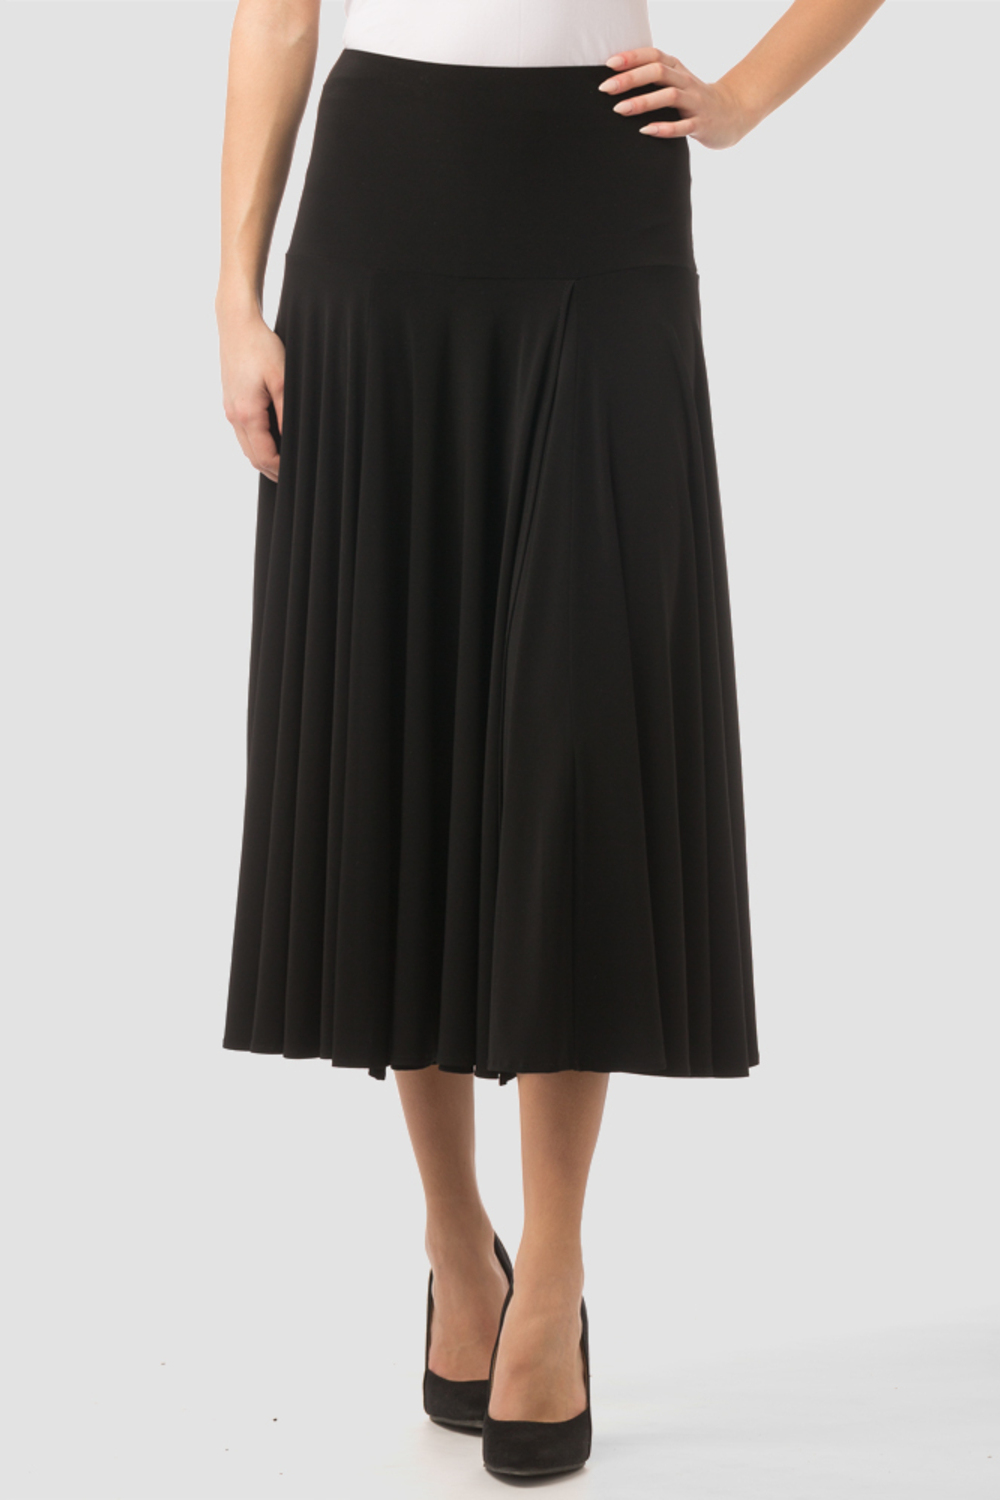 Joseph Ribkoff skirt style 164081. Black